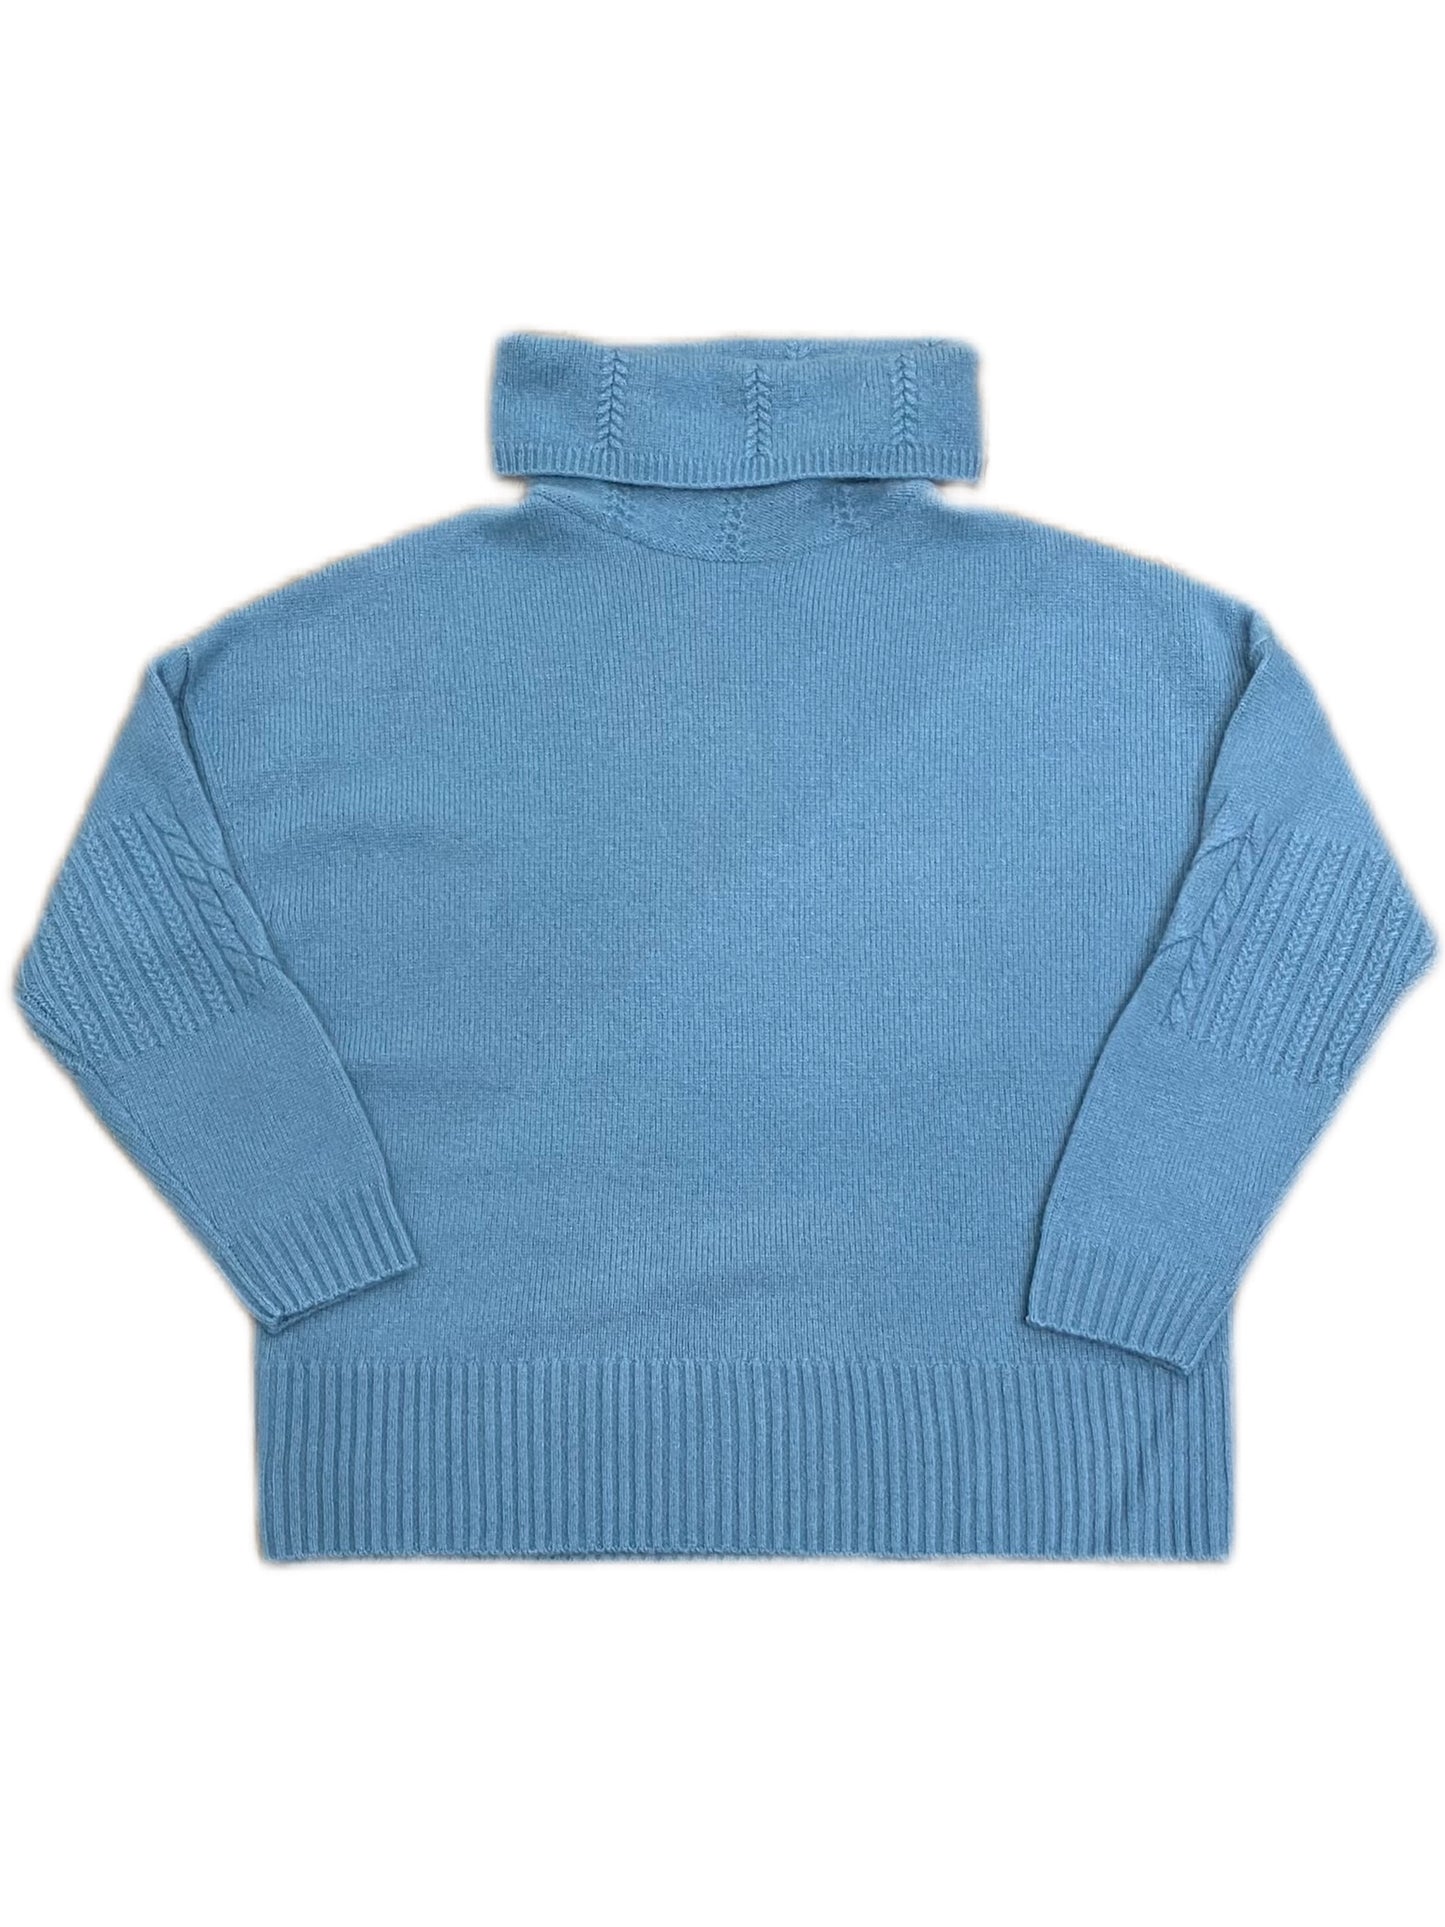 Cashmere Soft Turtleneck Pullover Sweater